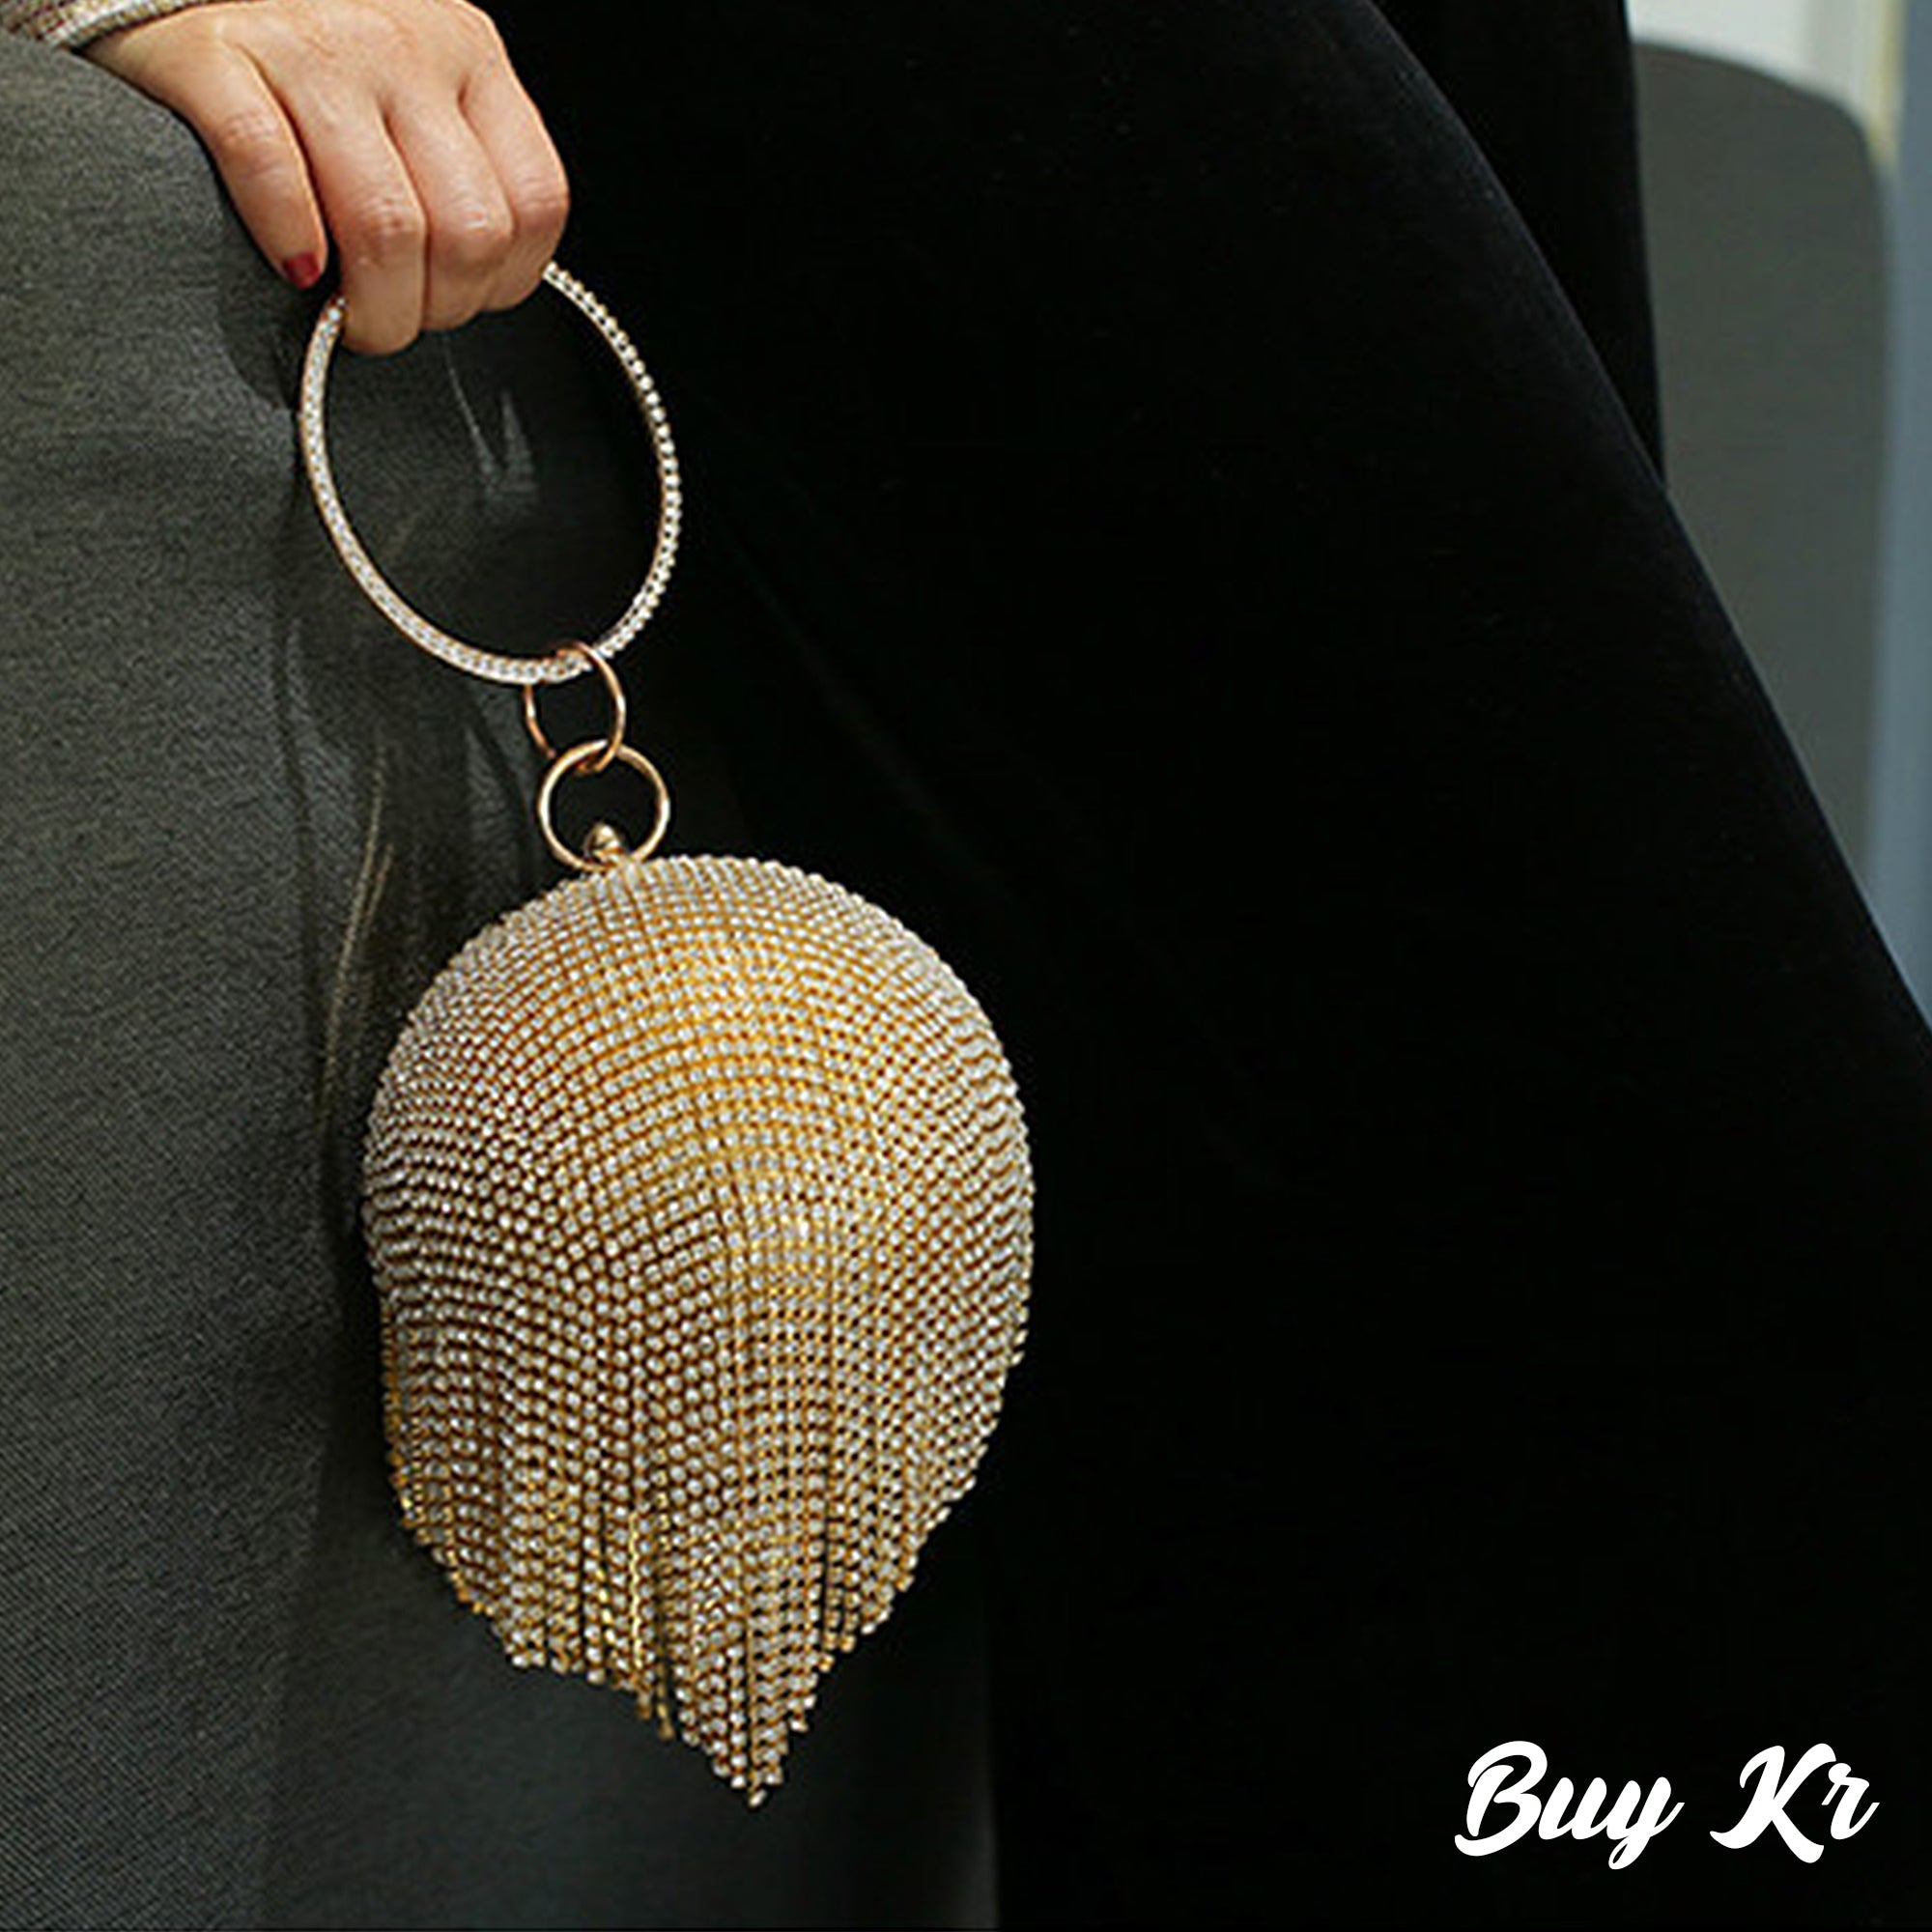 Handbags Women Round Ball Crystal Evening Clutch Purse Wedding Party Hand  Bag | eBay